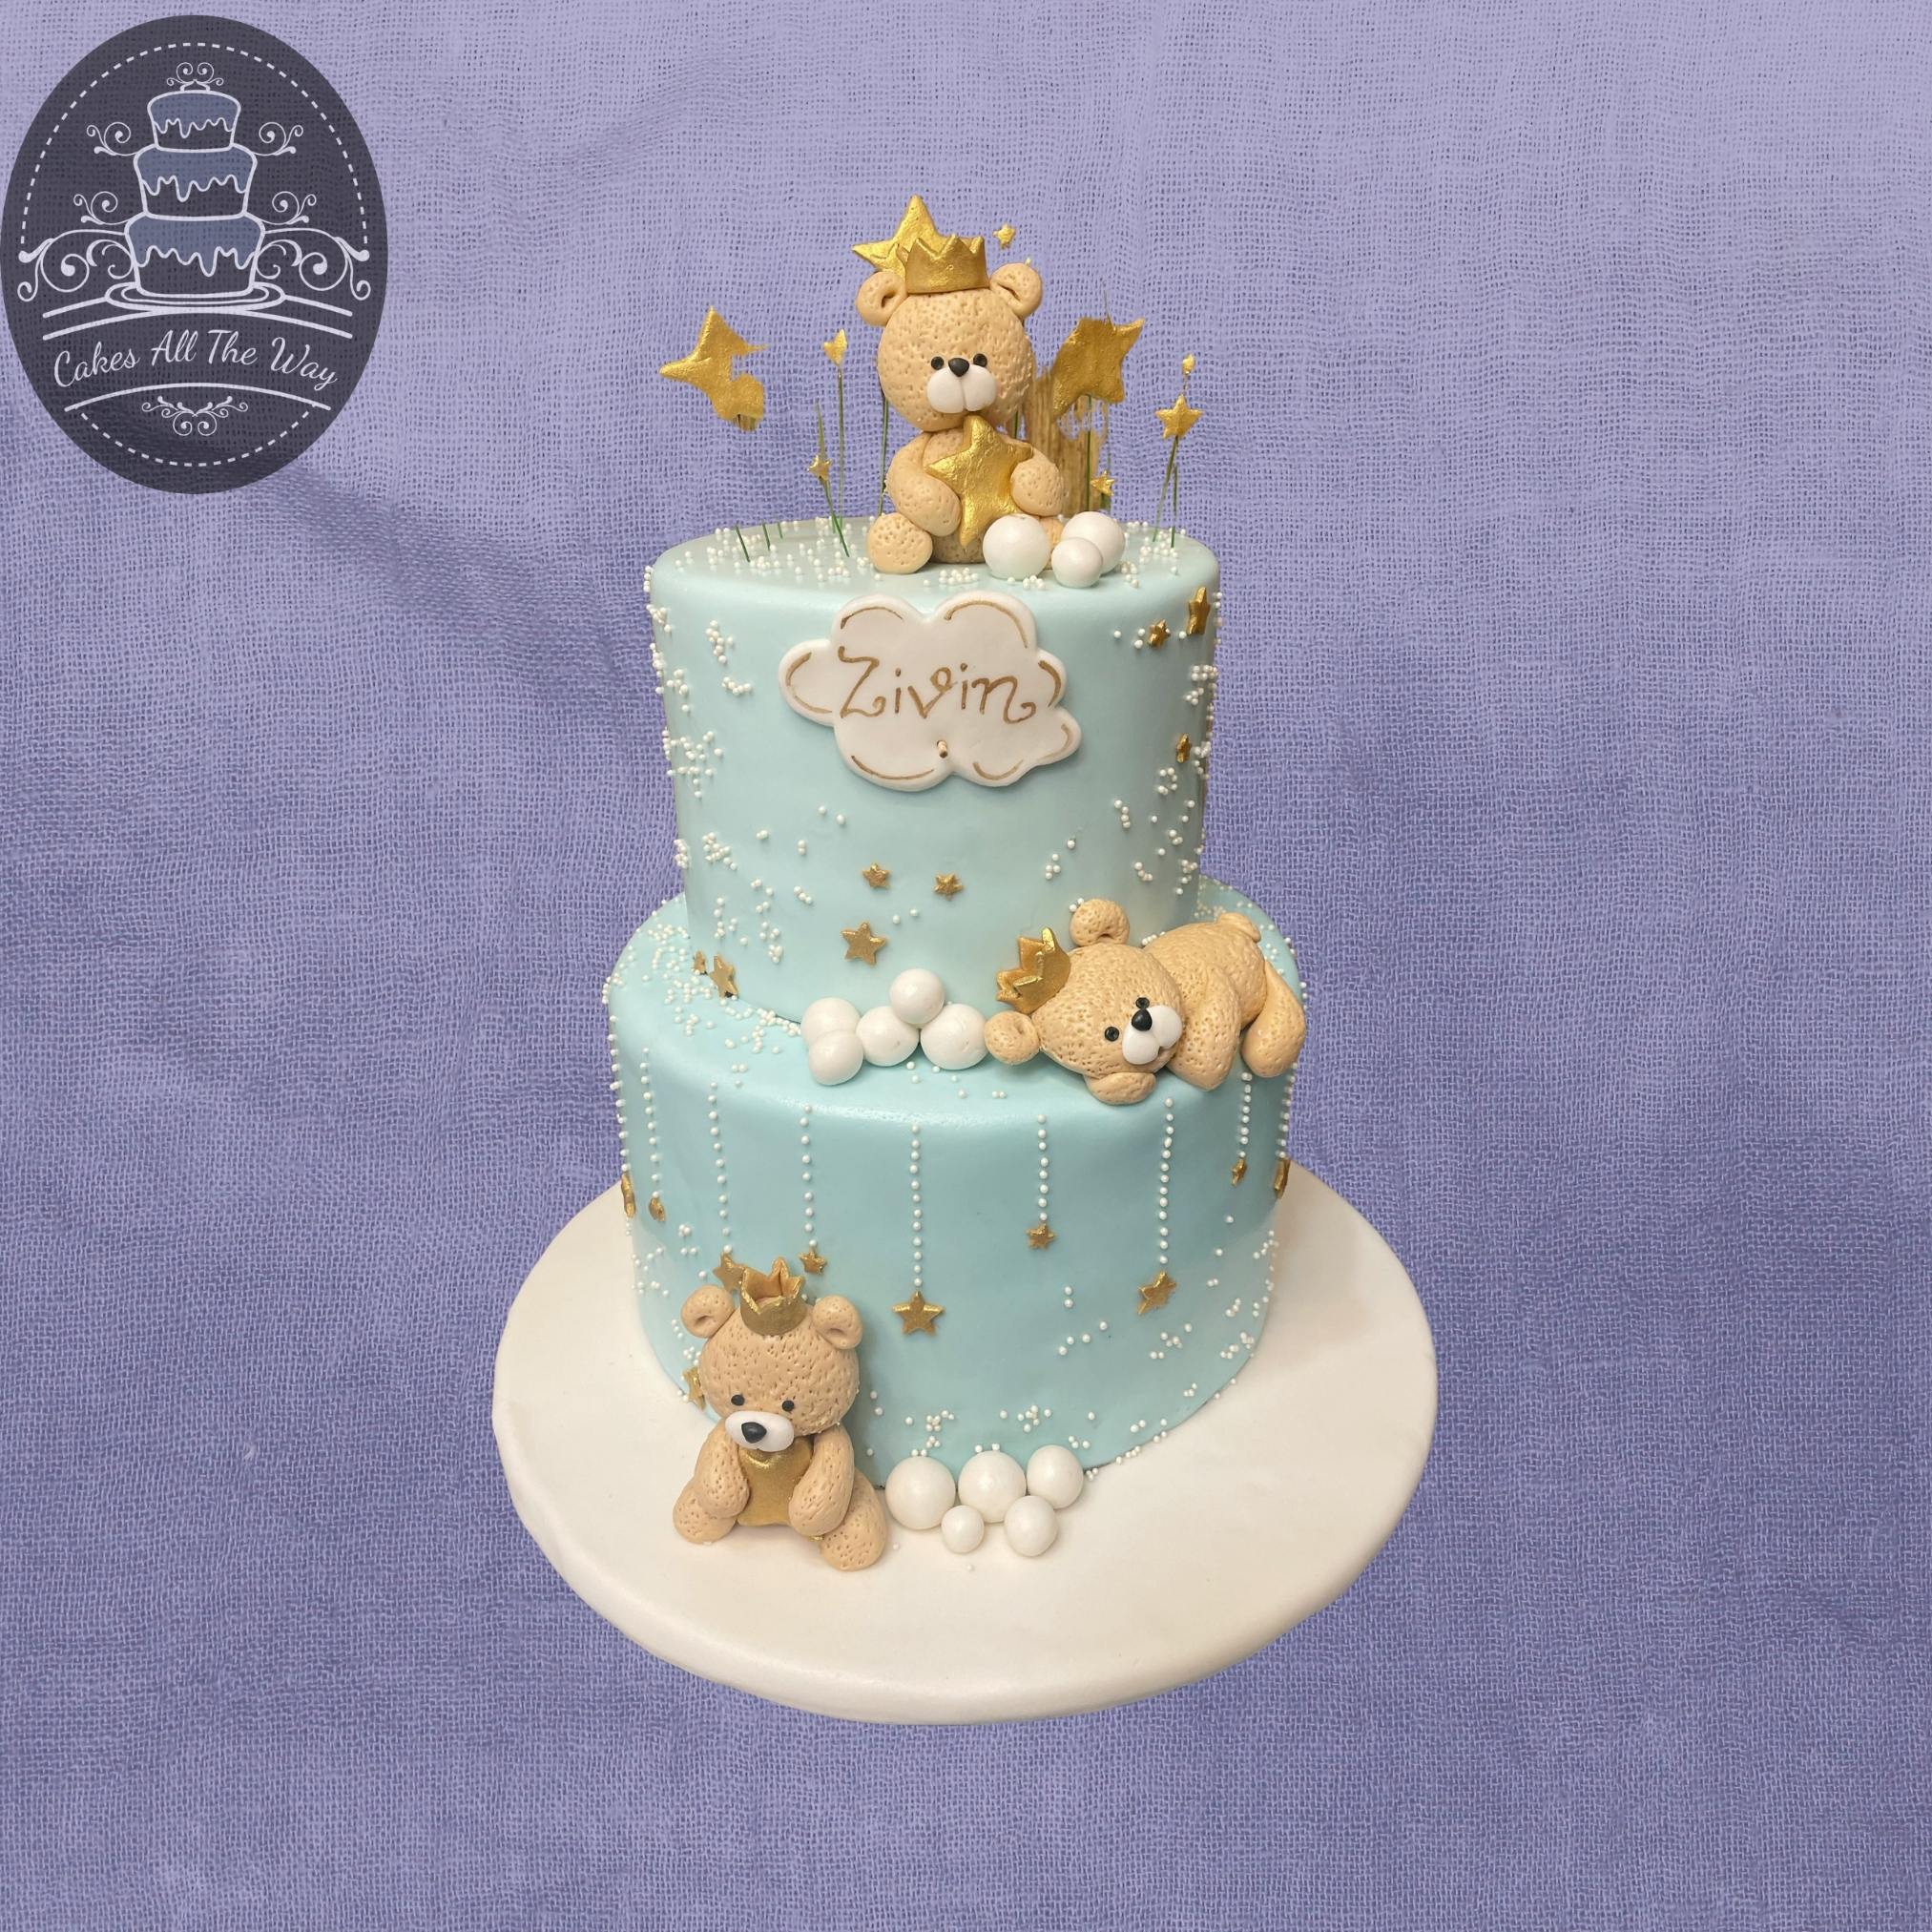 DIY Teddy Bear Cake Kit | Teddy Bears Picnic & Wild One Themed Parties